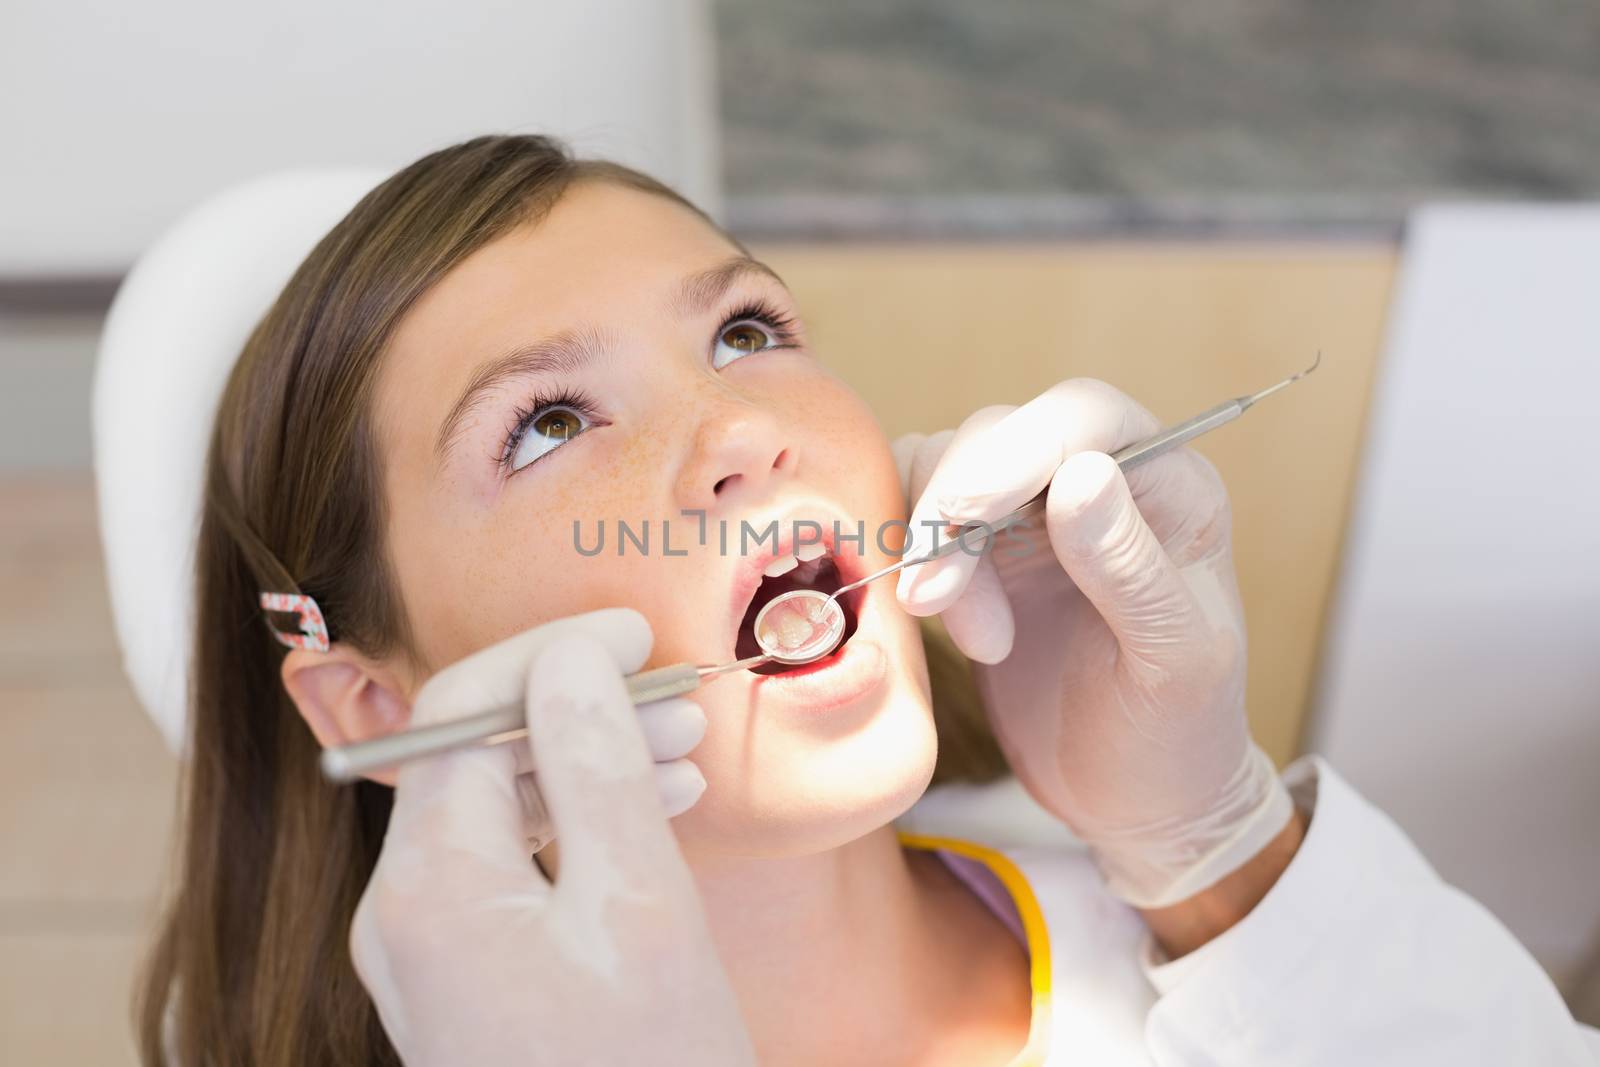 Pediatric dentist examining a little girls teeth in the dentists chair by Wavebreakmedia